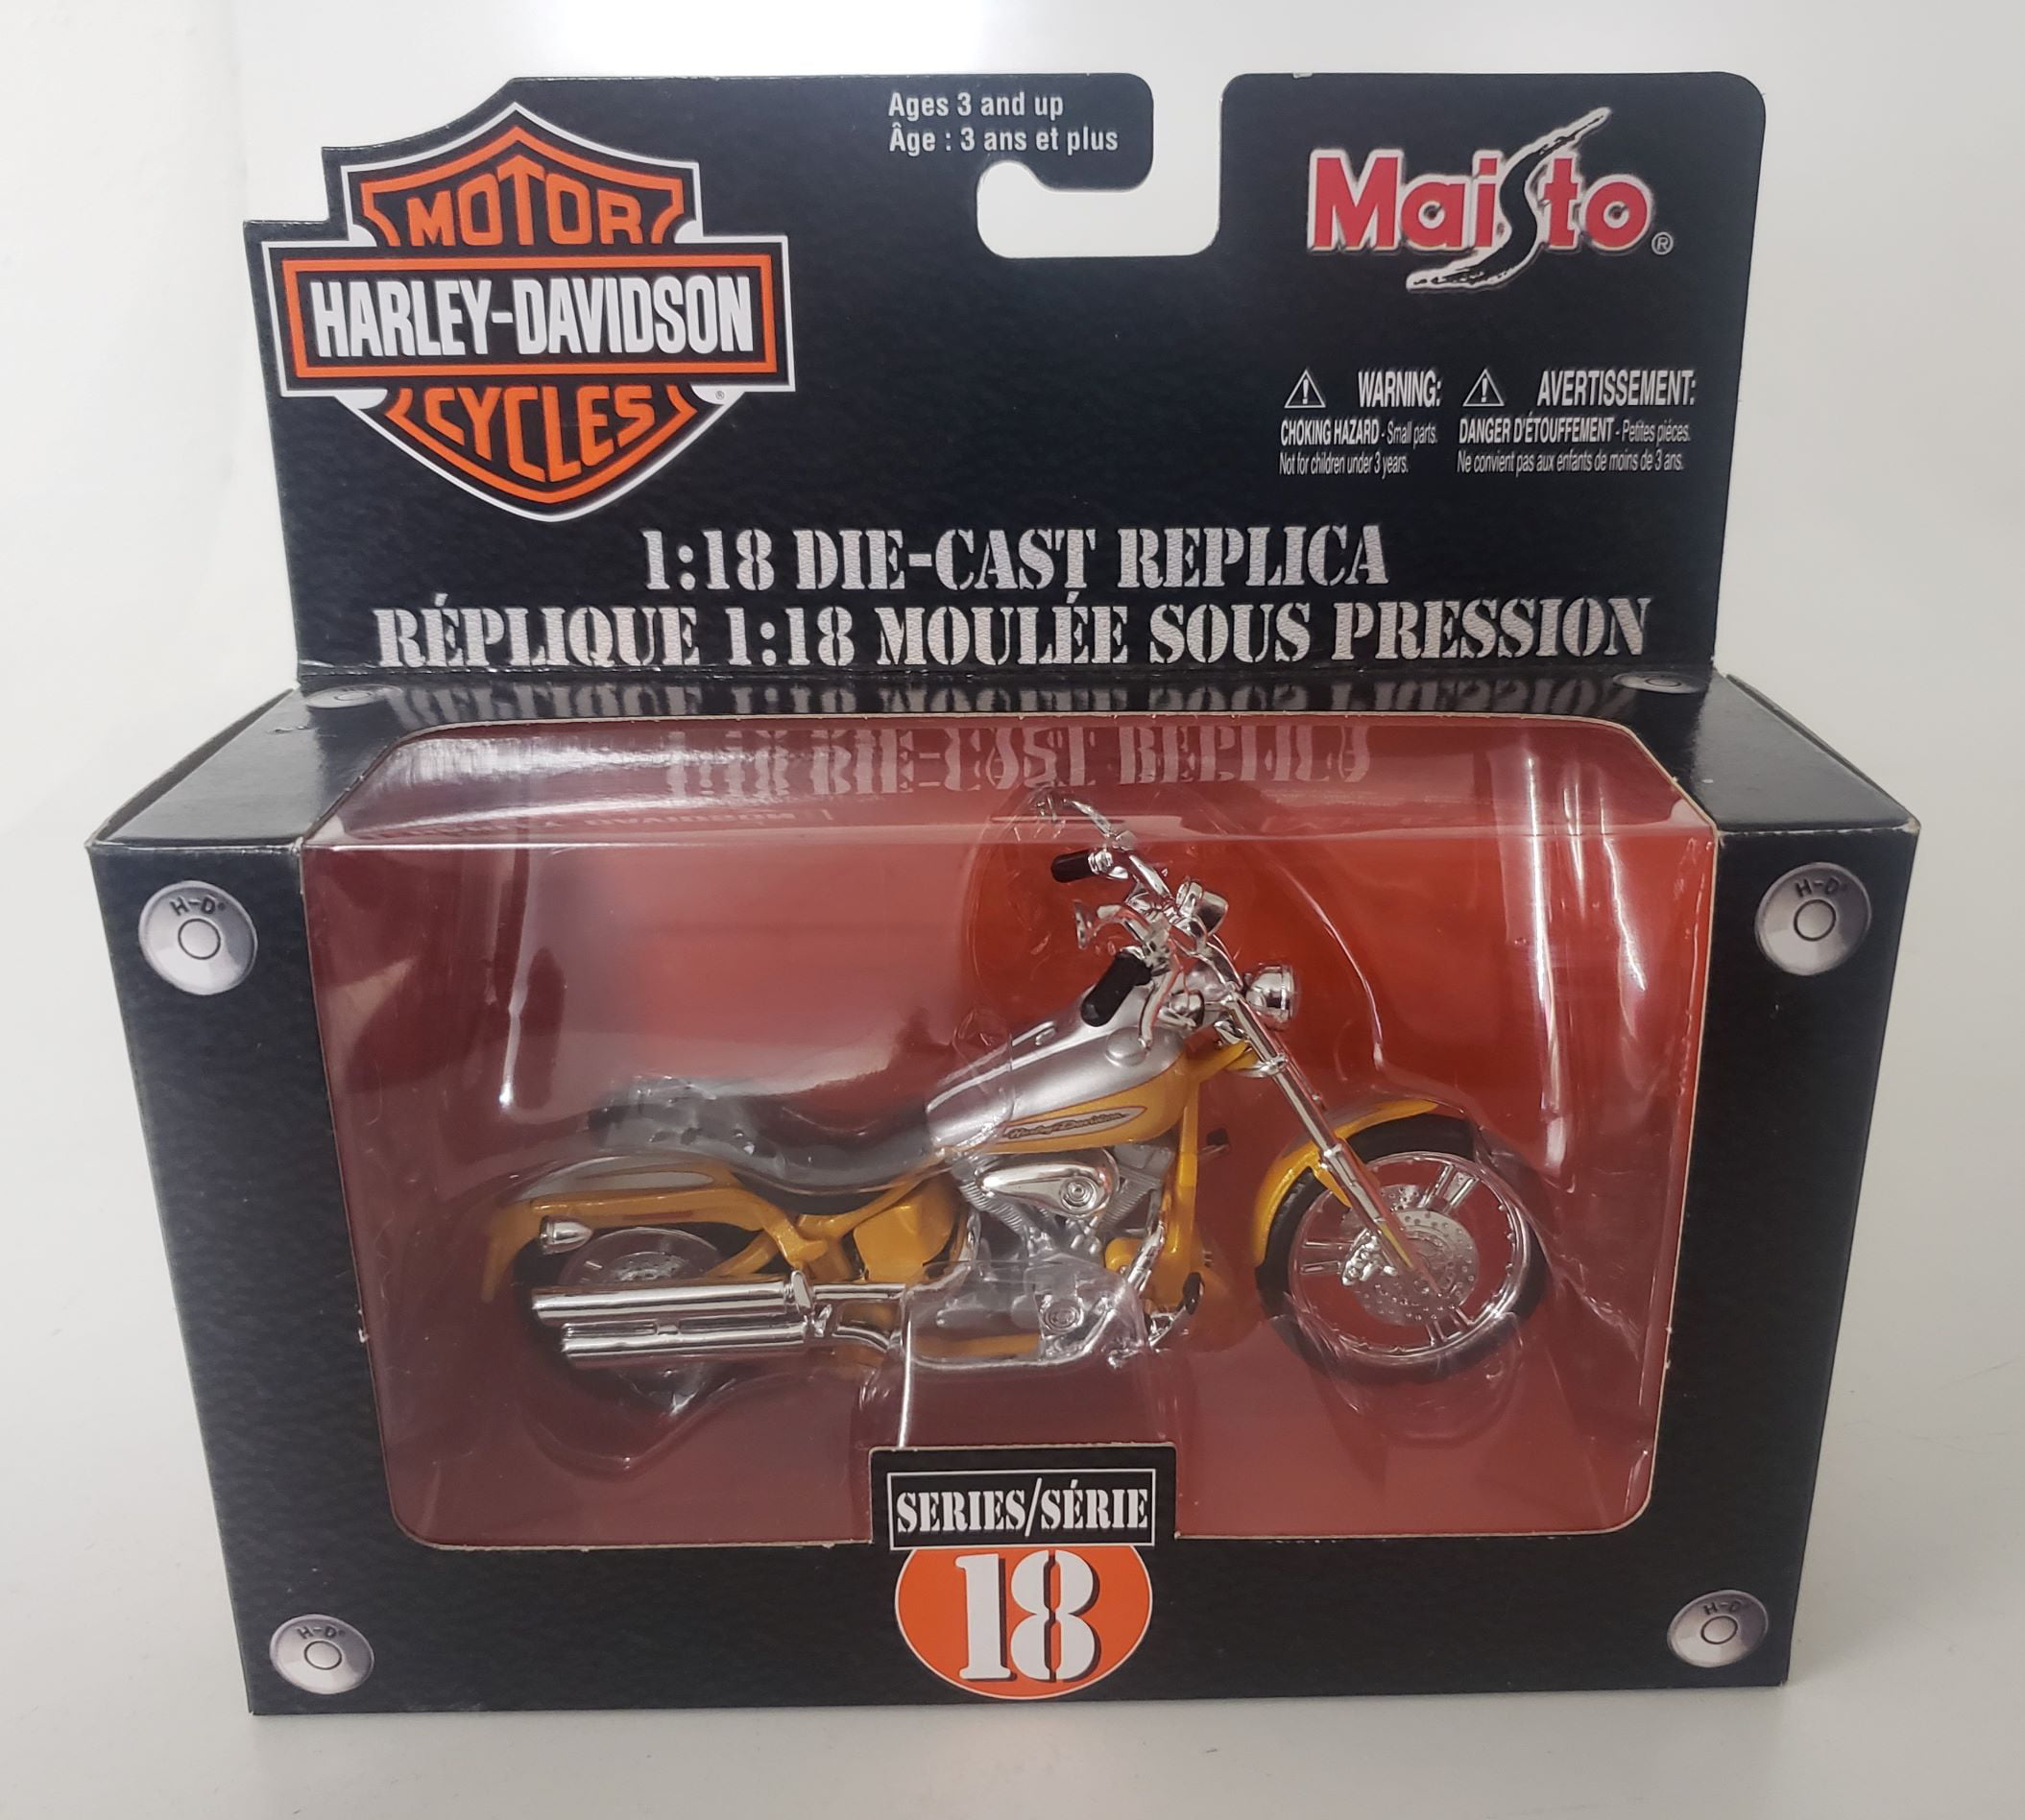 Kids Maisto 1:18 Ducati SuperSport S motorcycle racing bike Diecast model toy 